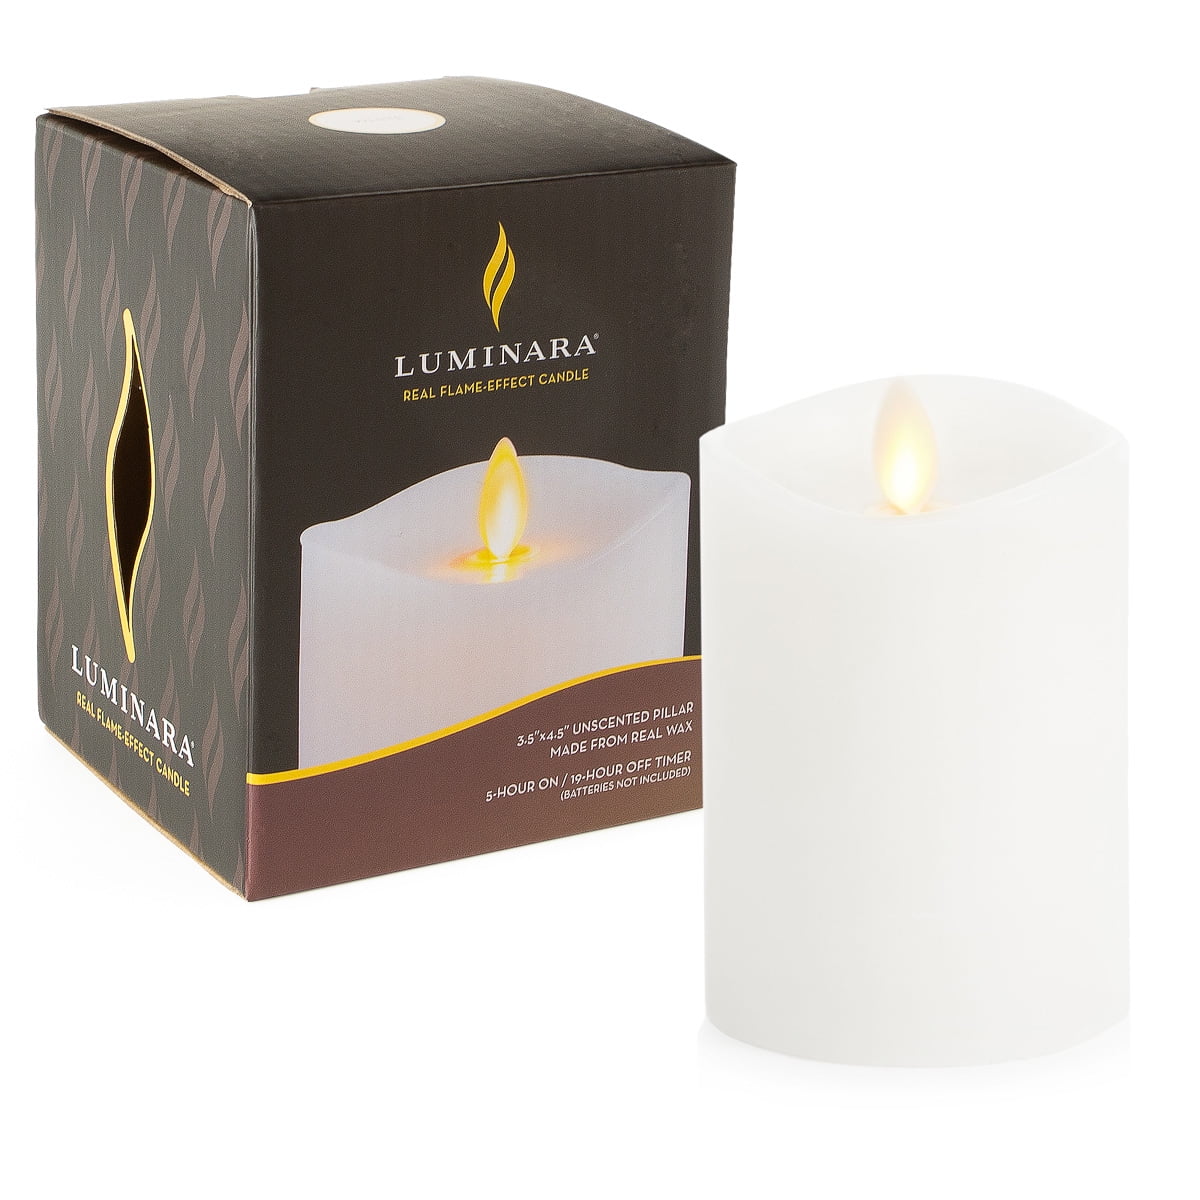 Luminara LED Light Flameless Pillar Wax Candle Real Flame Effect Unscented 